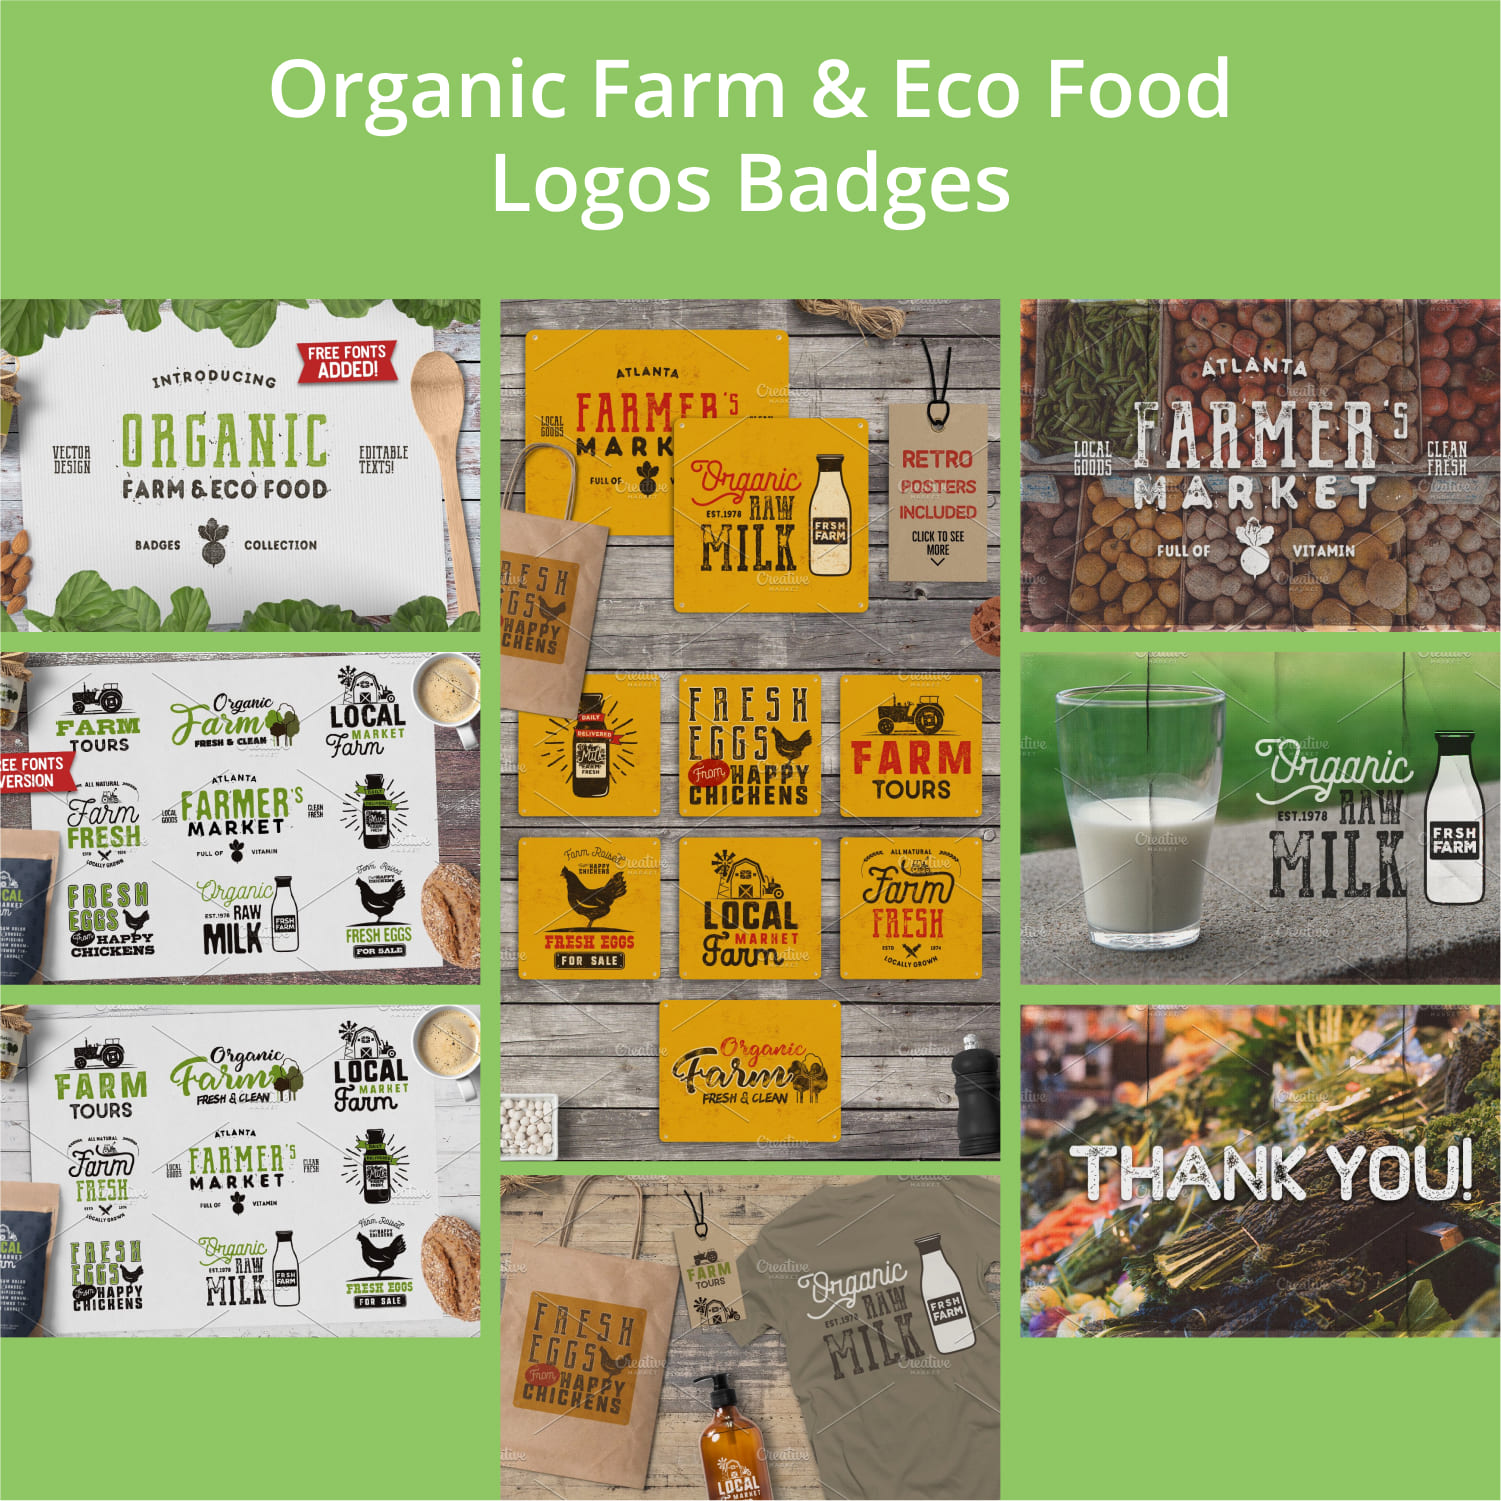 Organic Farm & Eco Food Logos Badges JeksonGraphics.